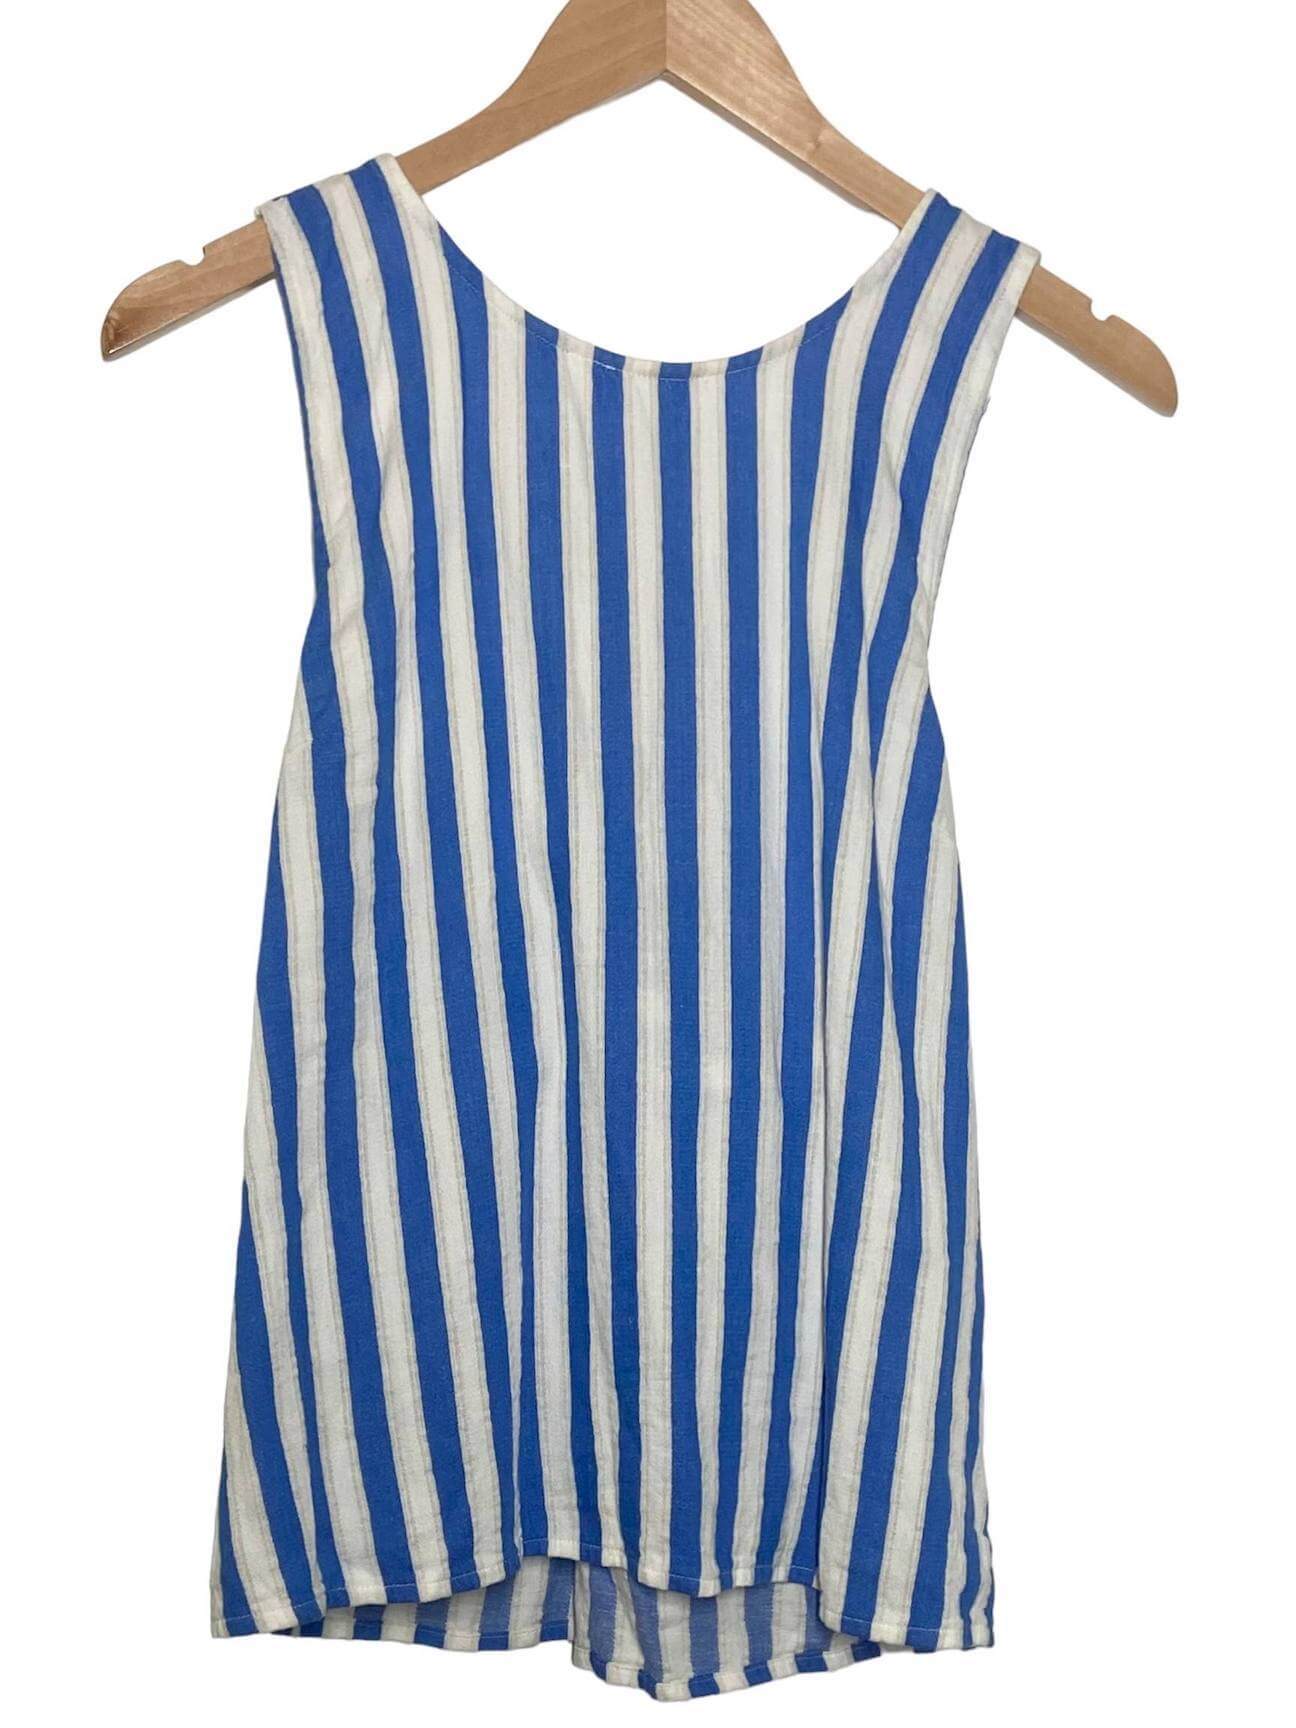 Light Summer J.CREW blue stripe crisscross back sleeveless top